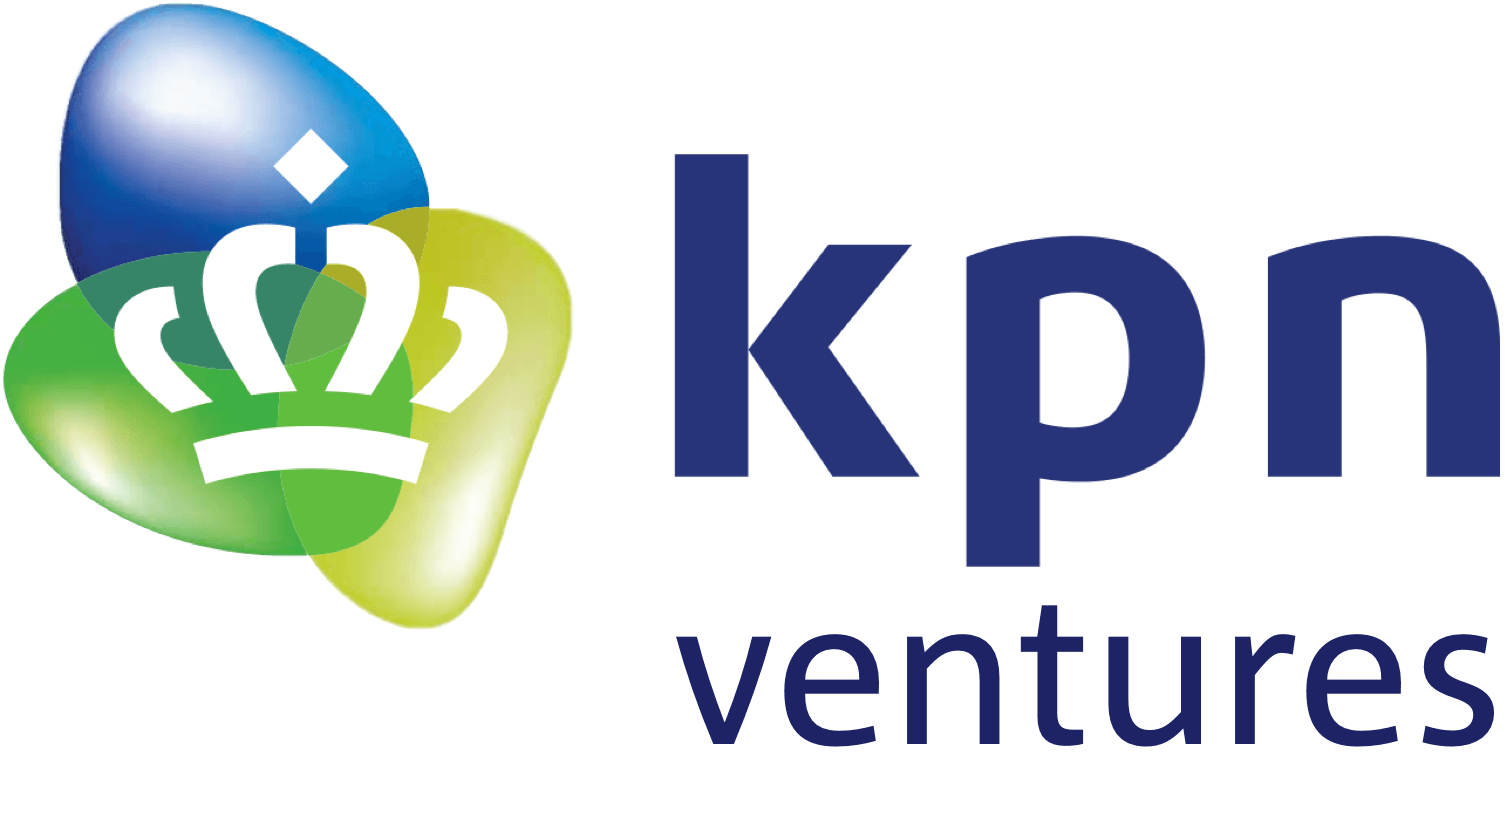 kpnventures logo sans